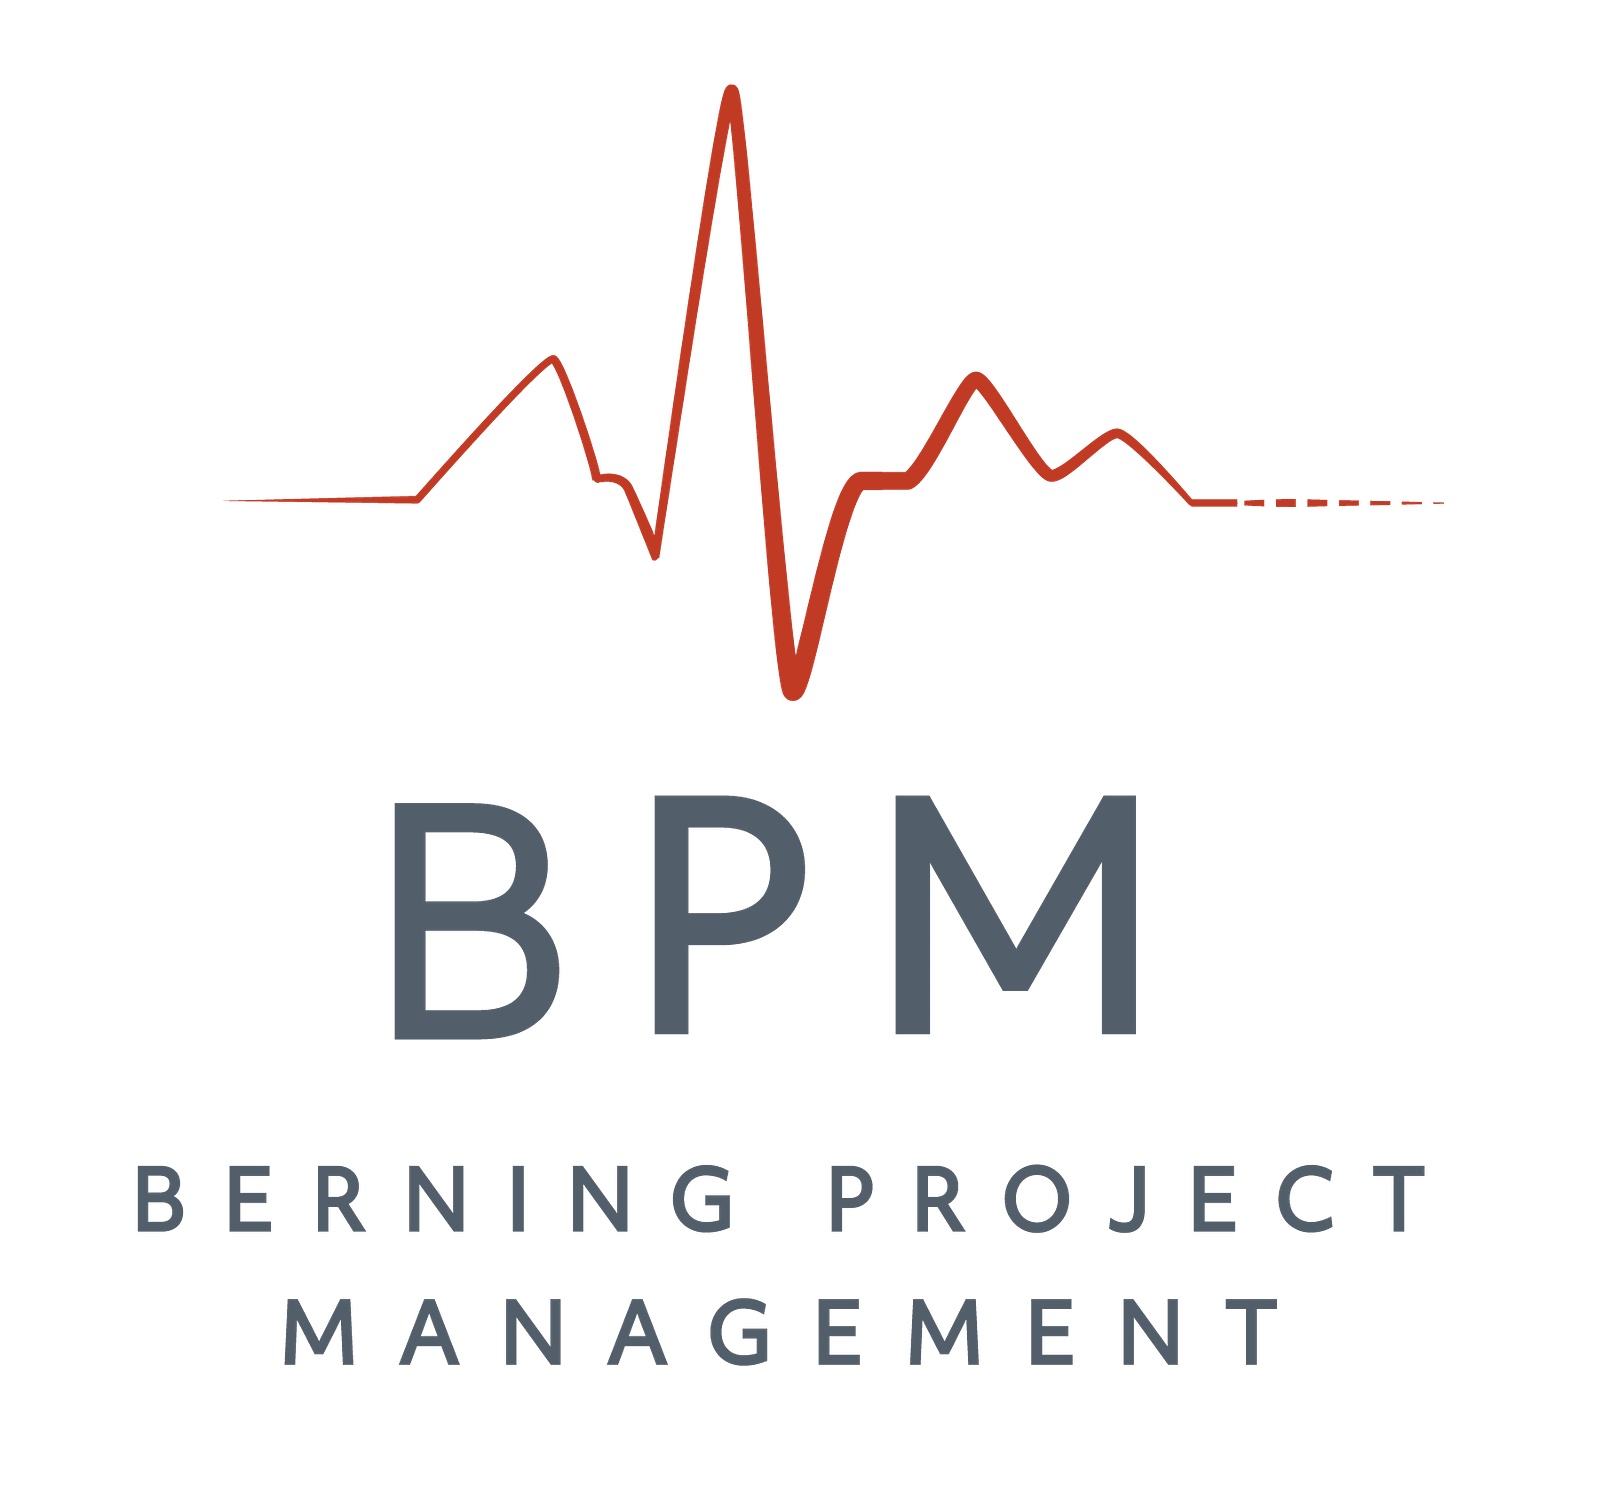 Berning Project Management